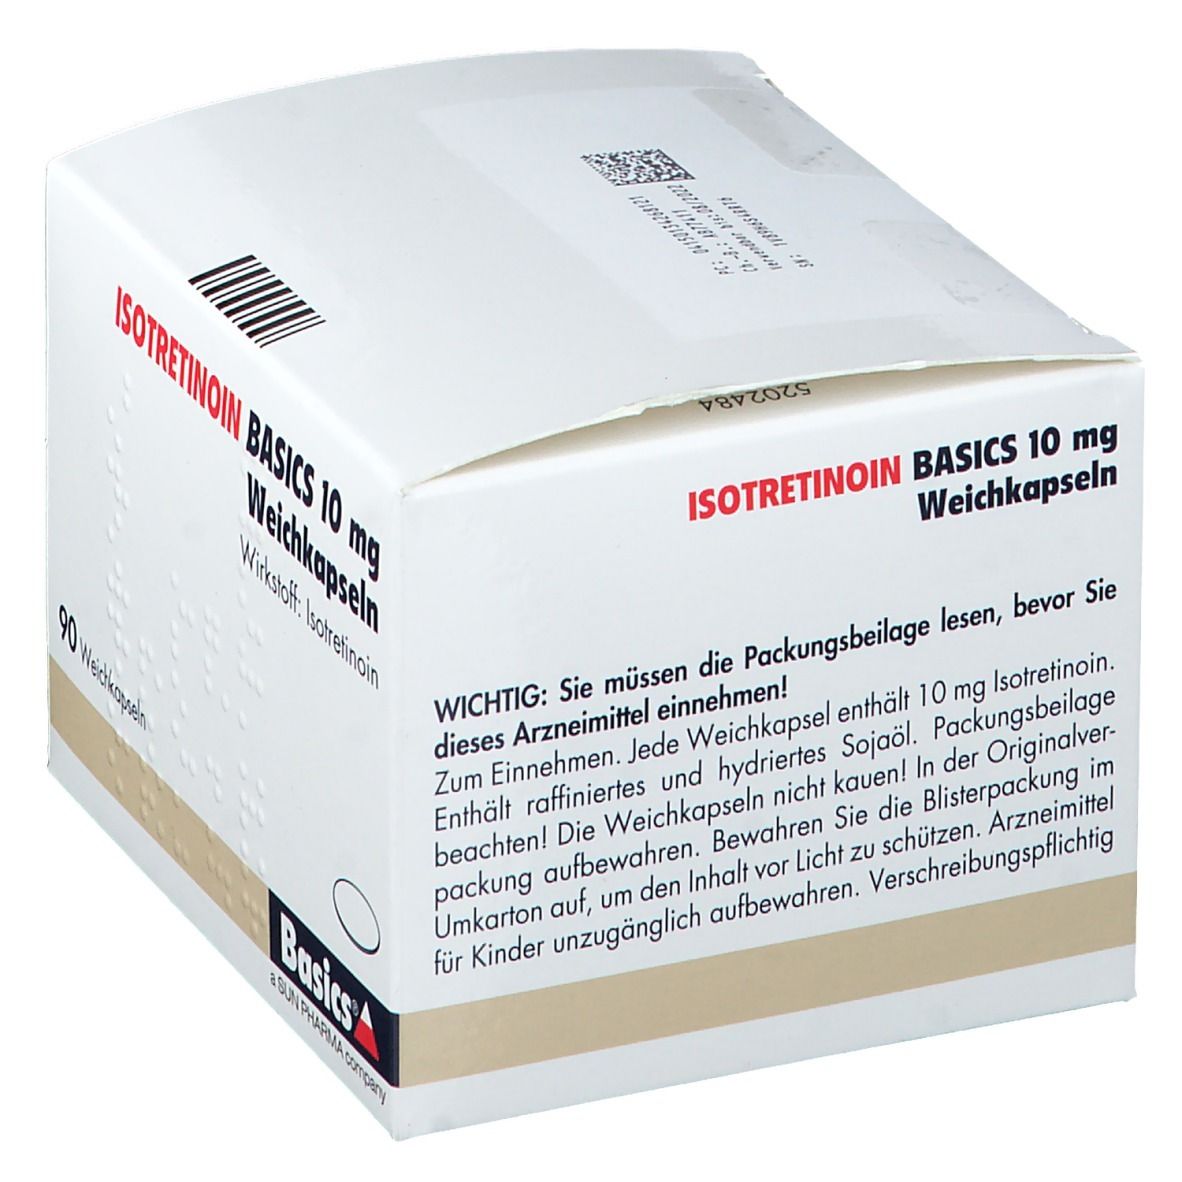 ISOTRETINOIN BASICS 10 mg